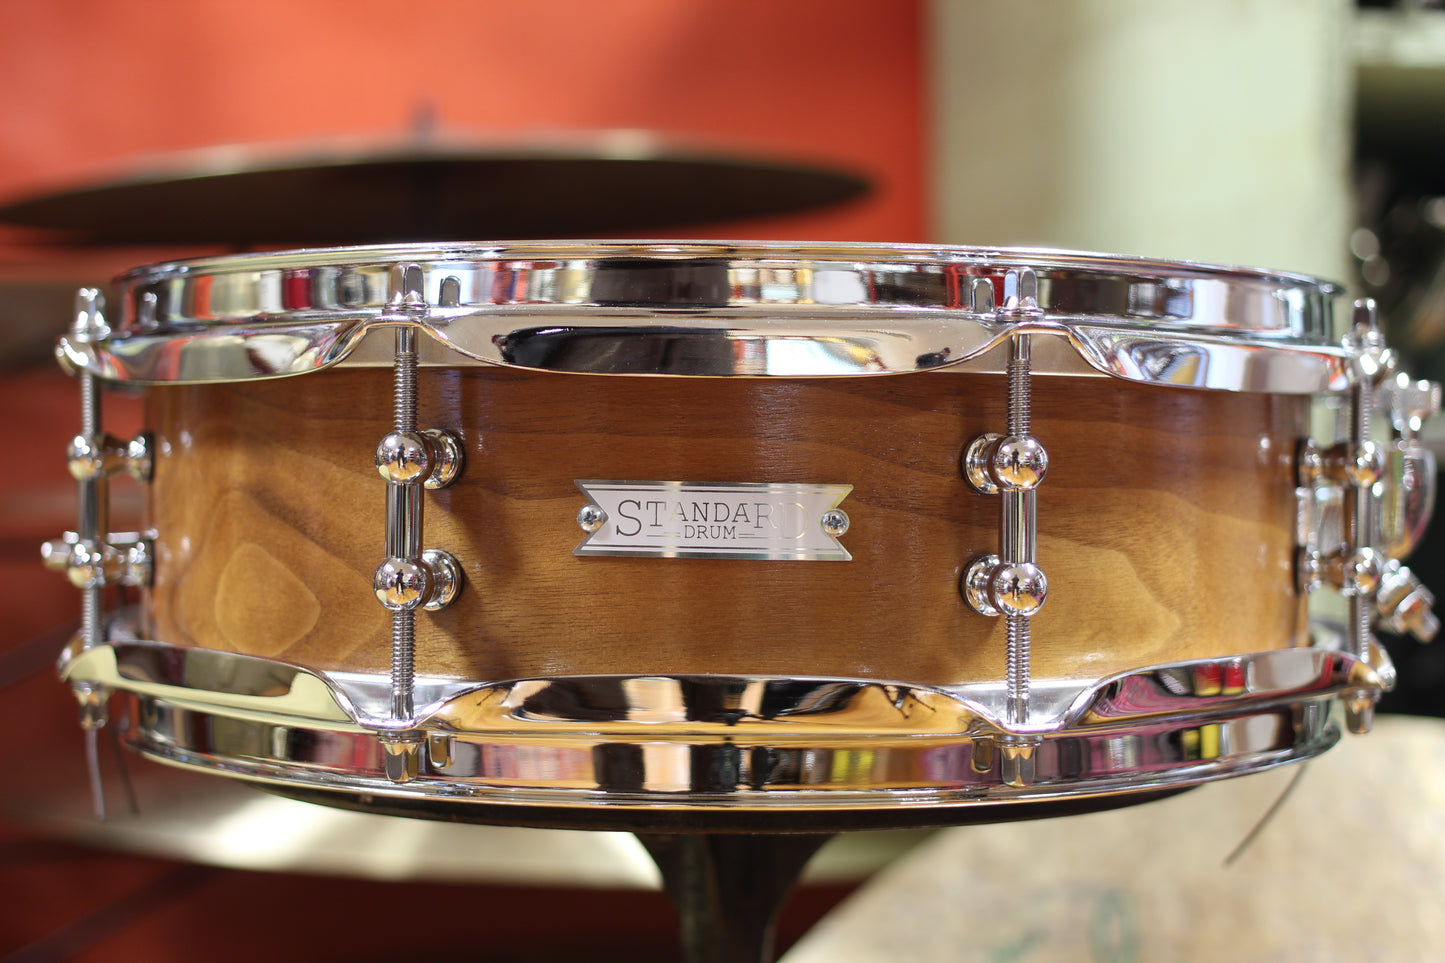 Standard Drum Company 4"x12" Snare Drum in Walnut Gloss